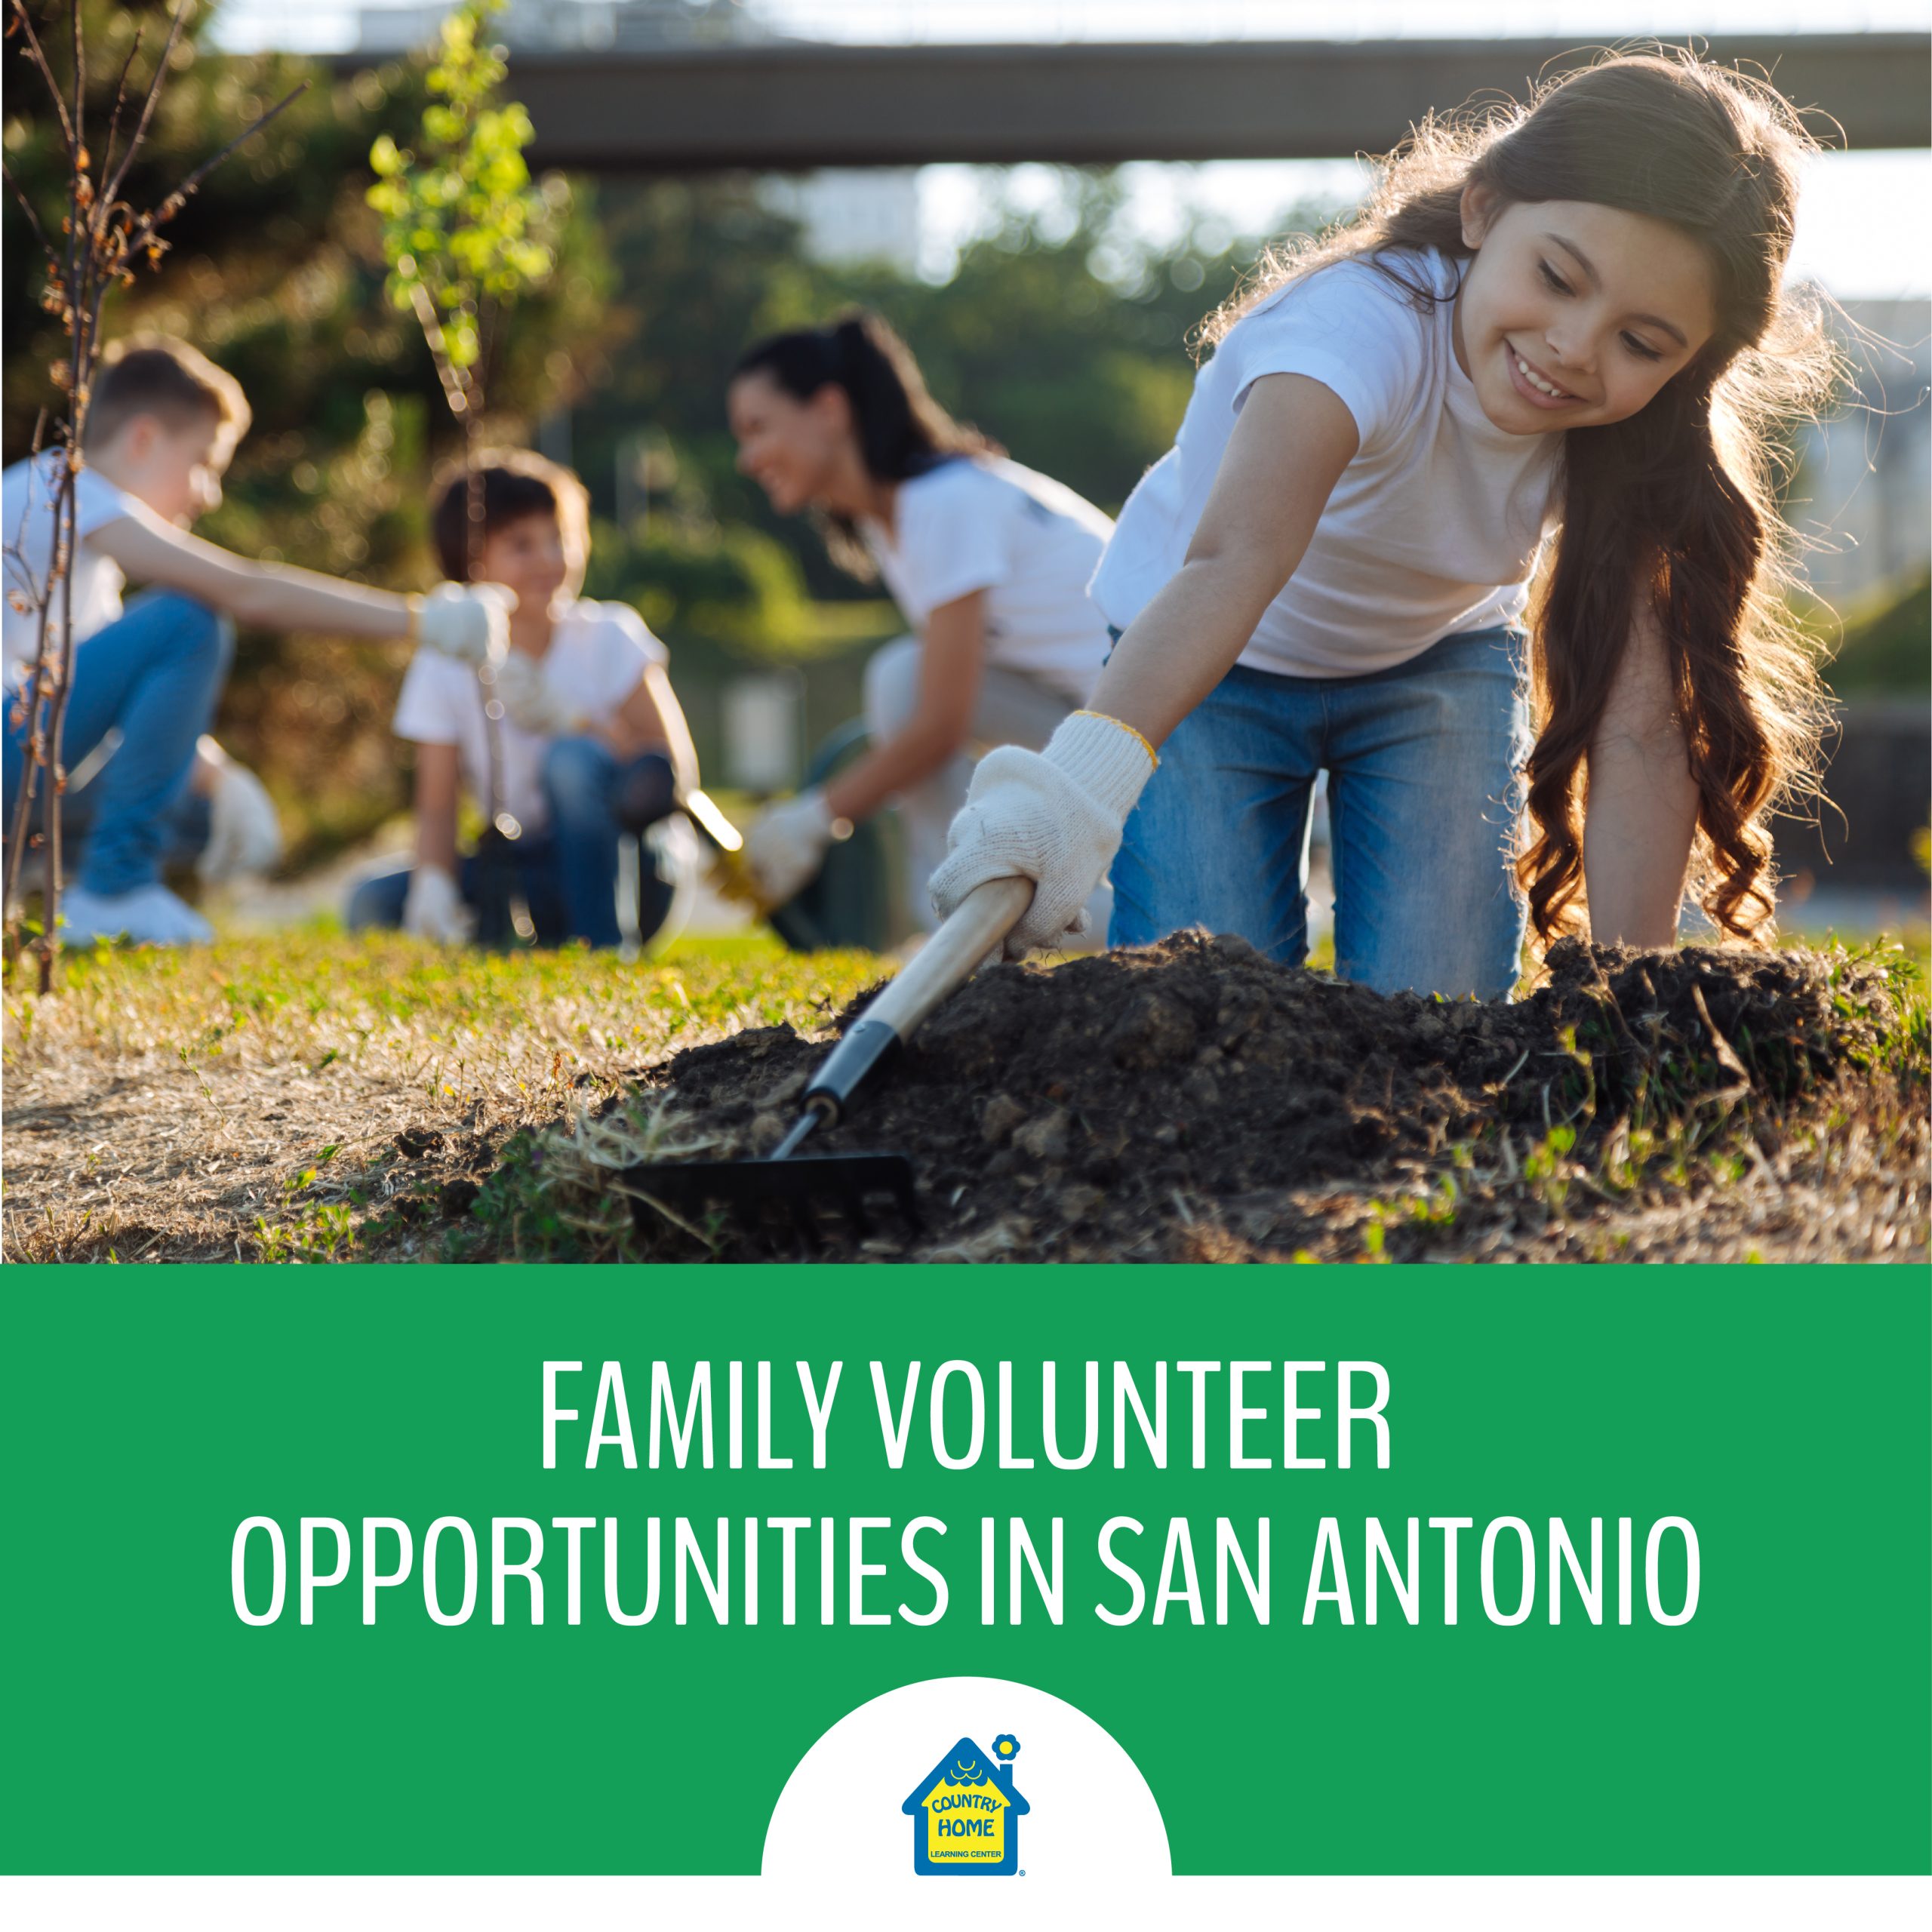 Family Volunter Opportunities in San Antonio